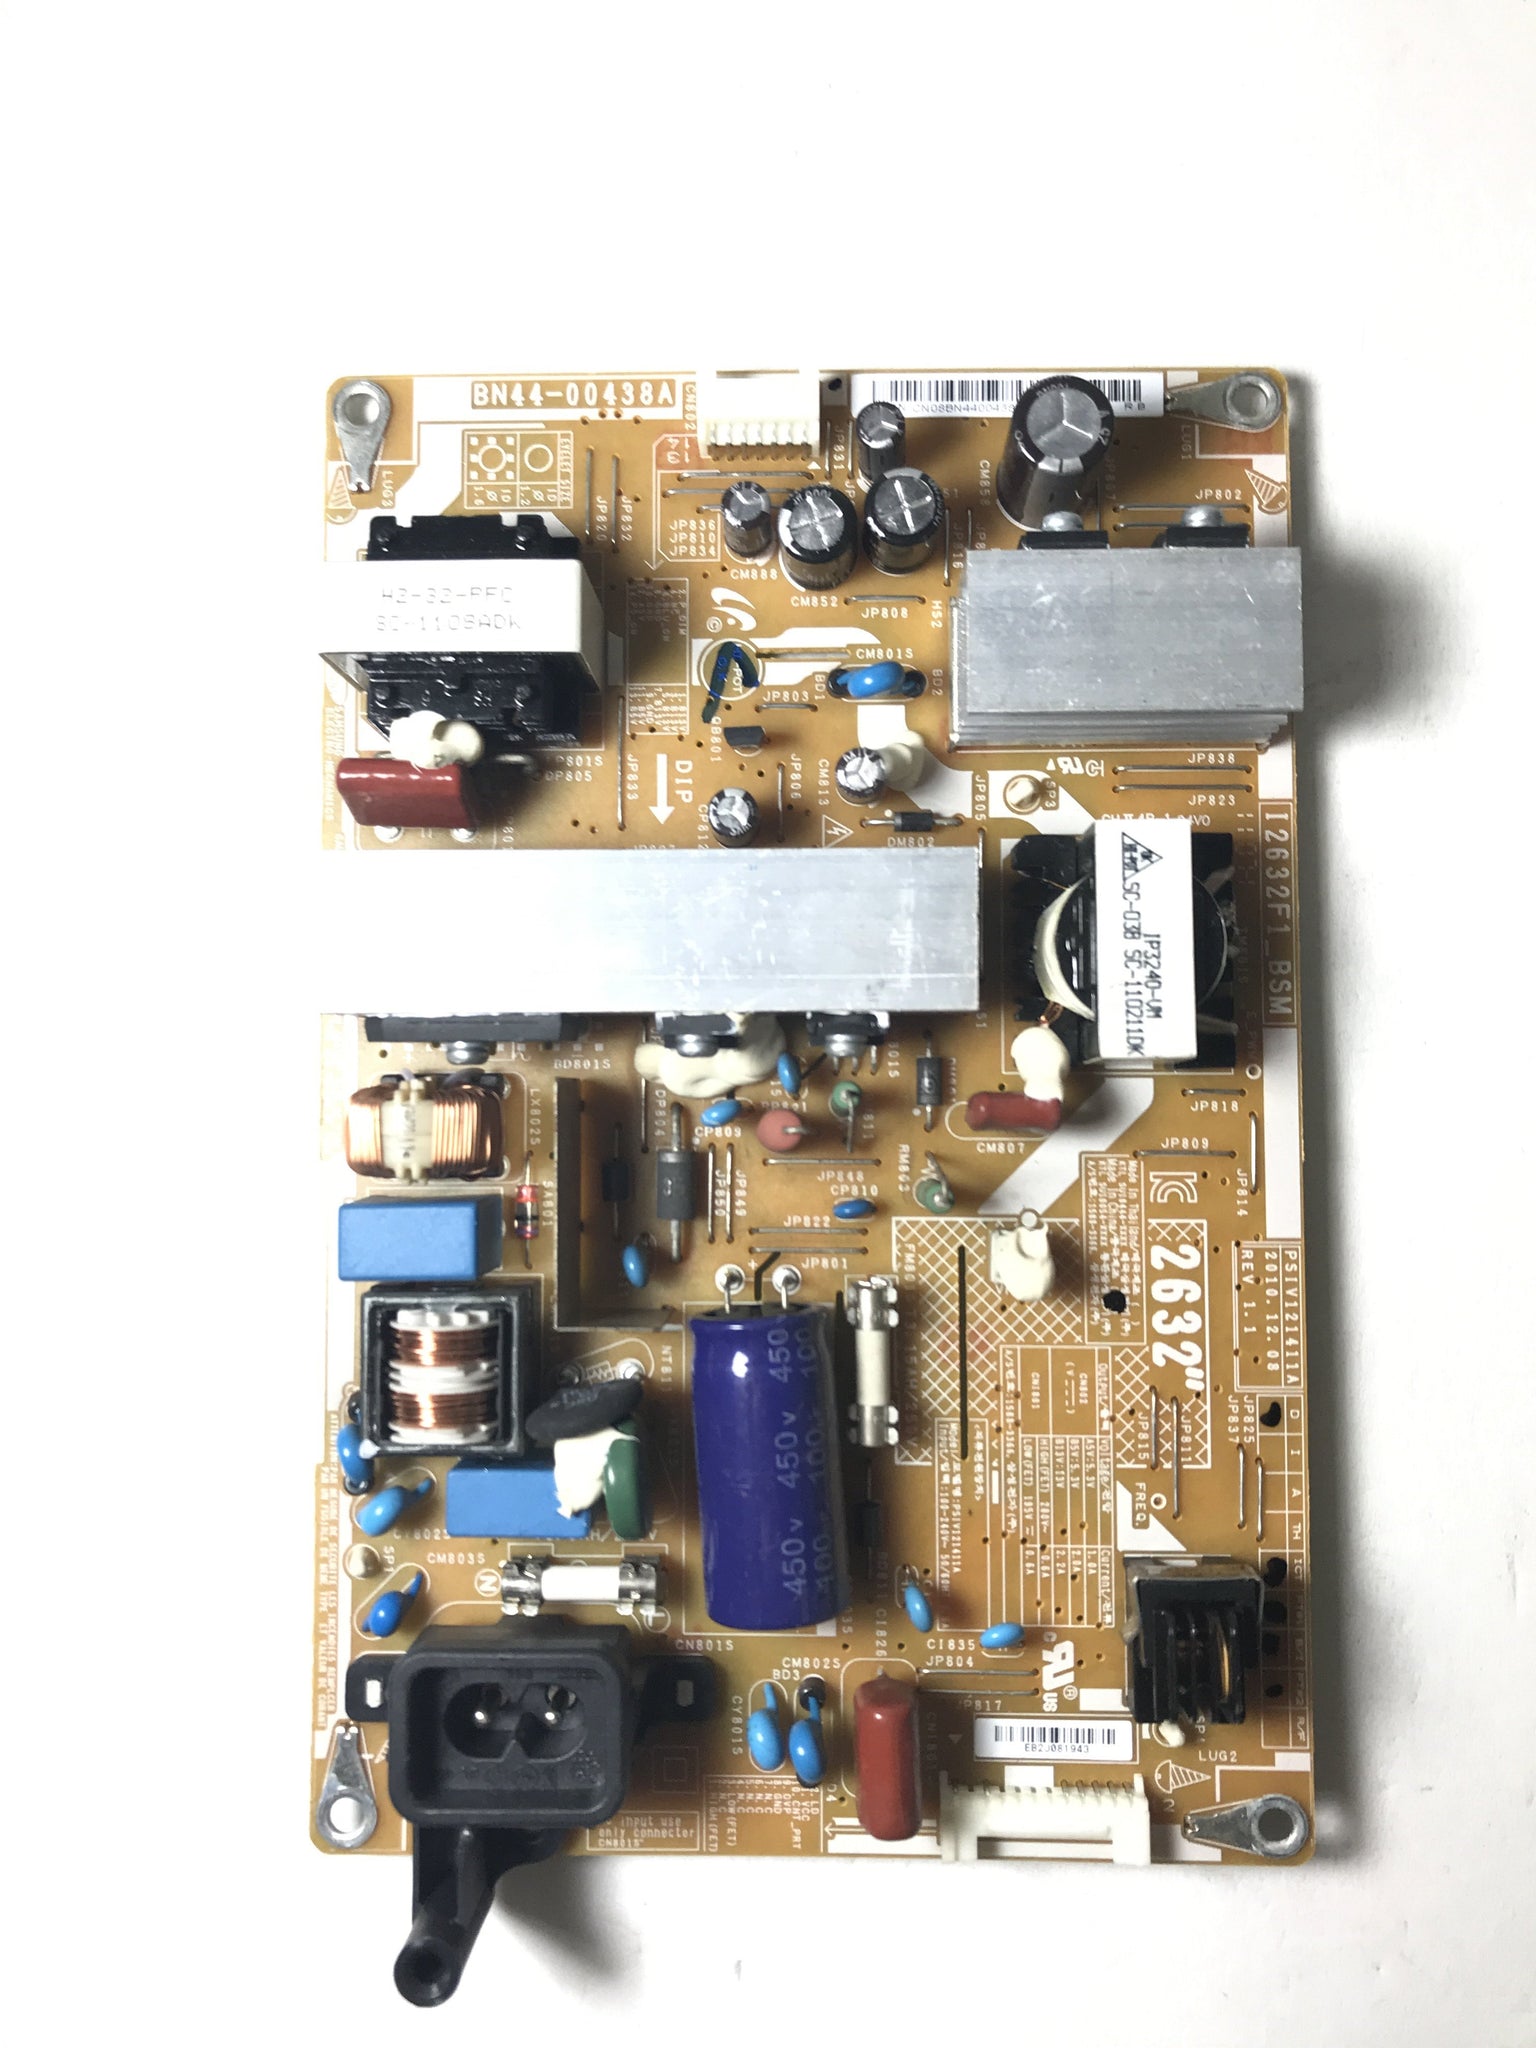 Samsung BN44-00438A (PSIV121411A) Power Supply Unit